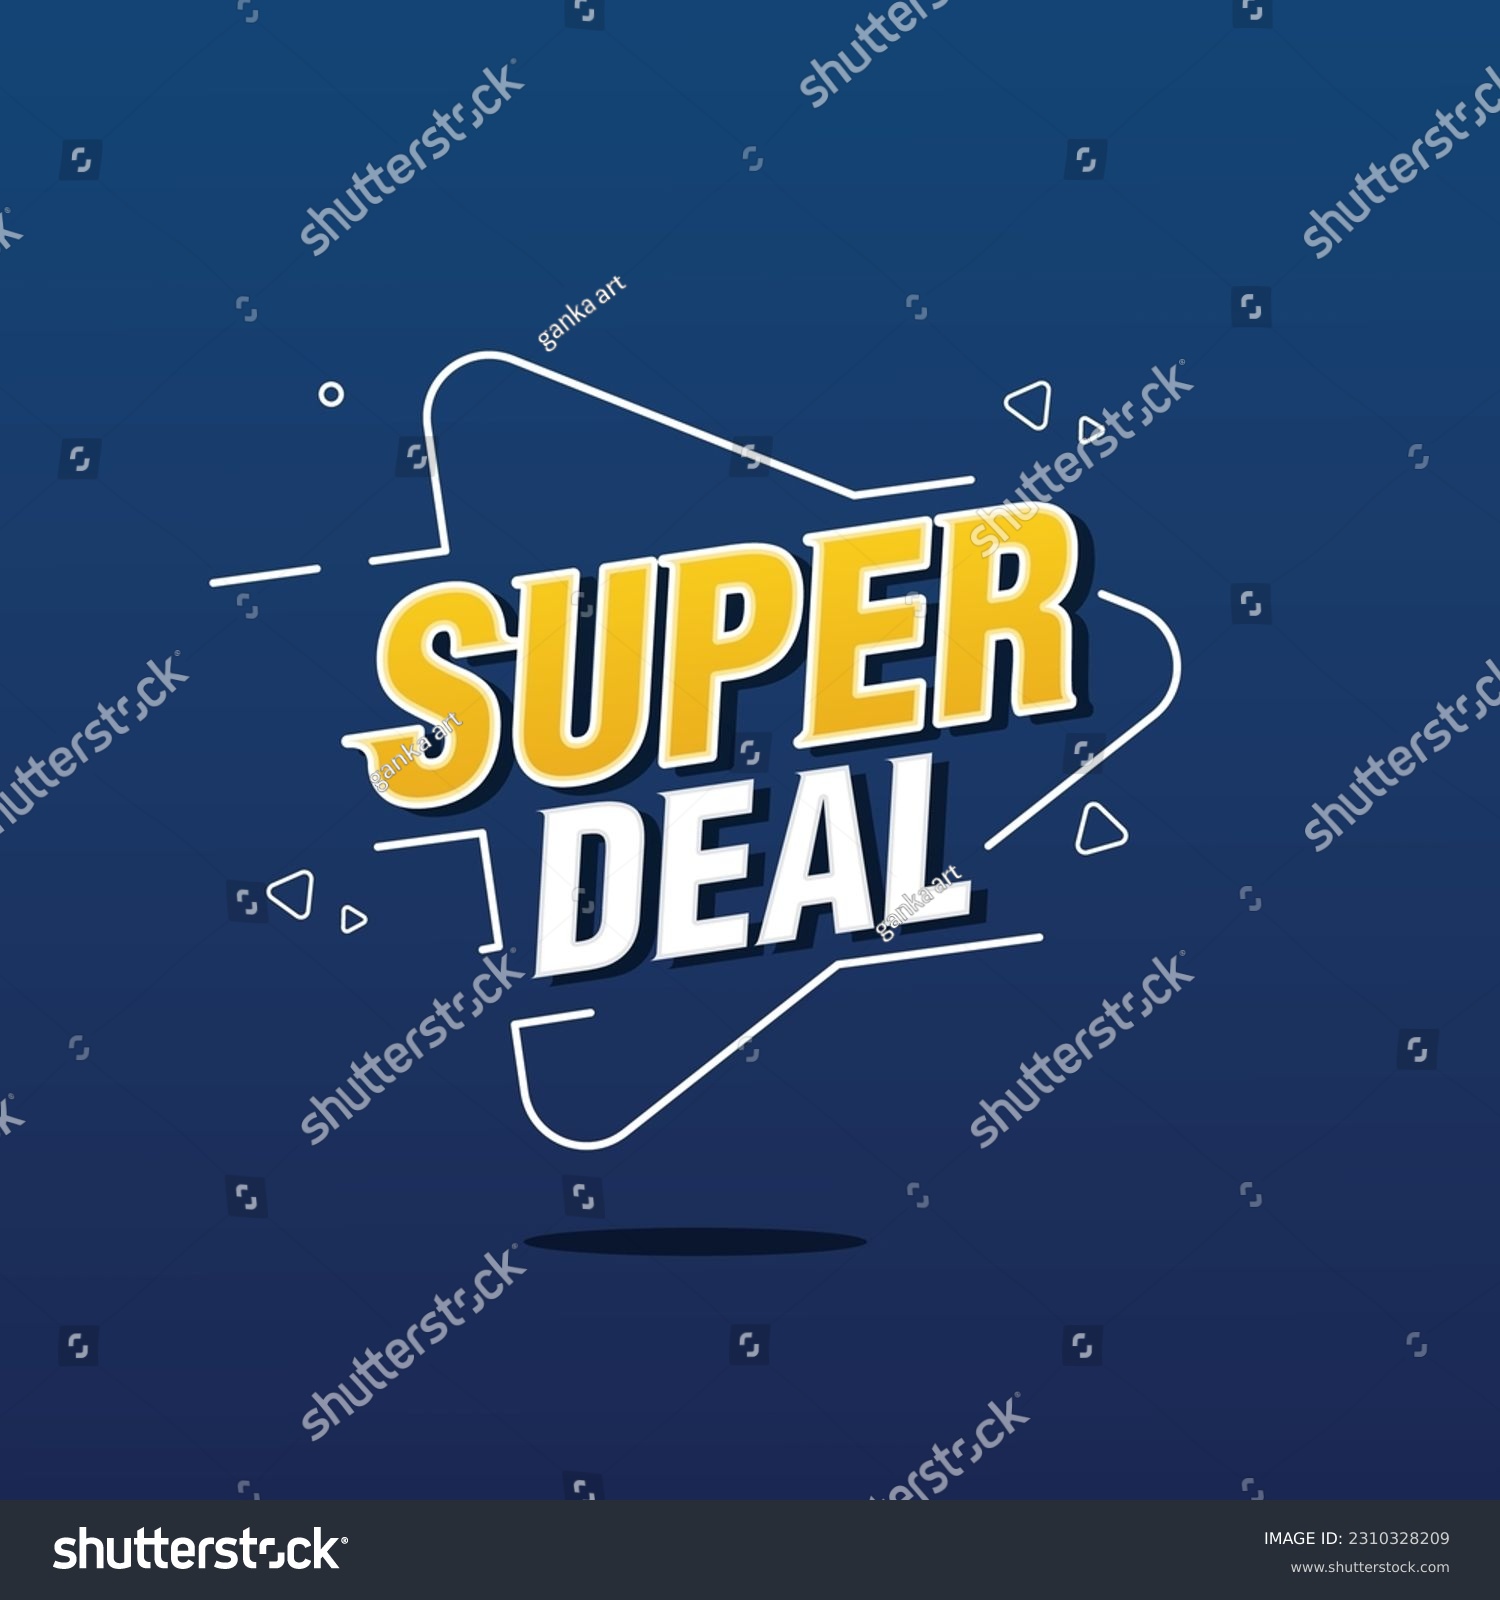 Super deal banner promotion, sale tag, banner template with blue background, Vector illustration. #2310328209